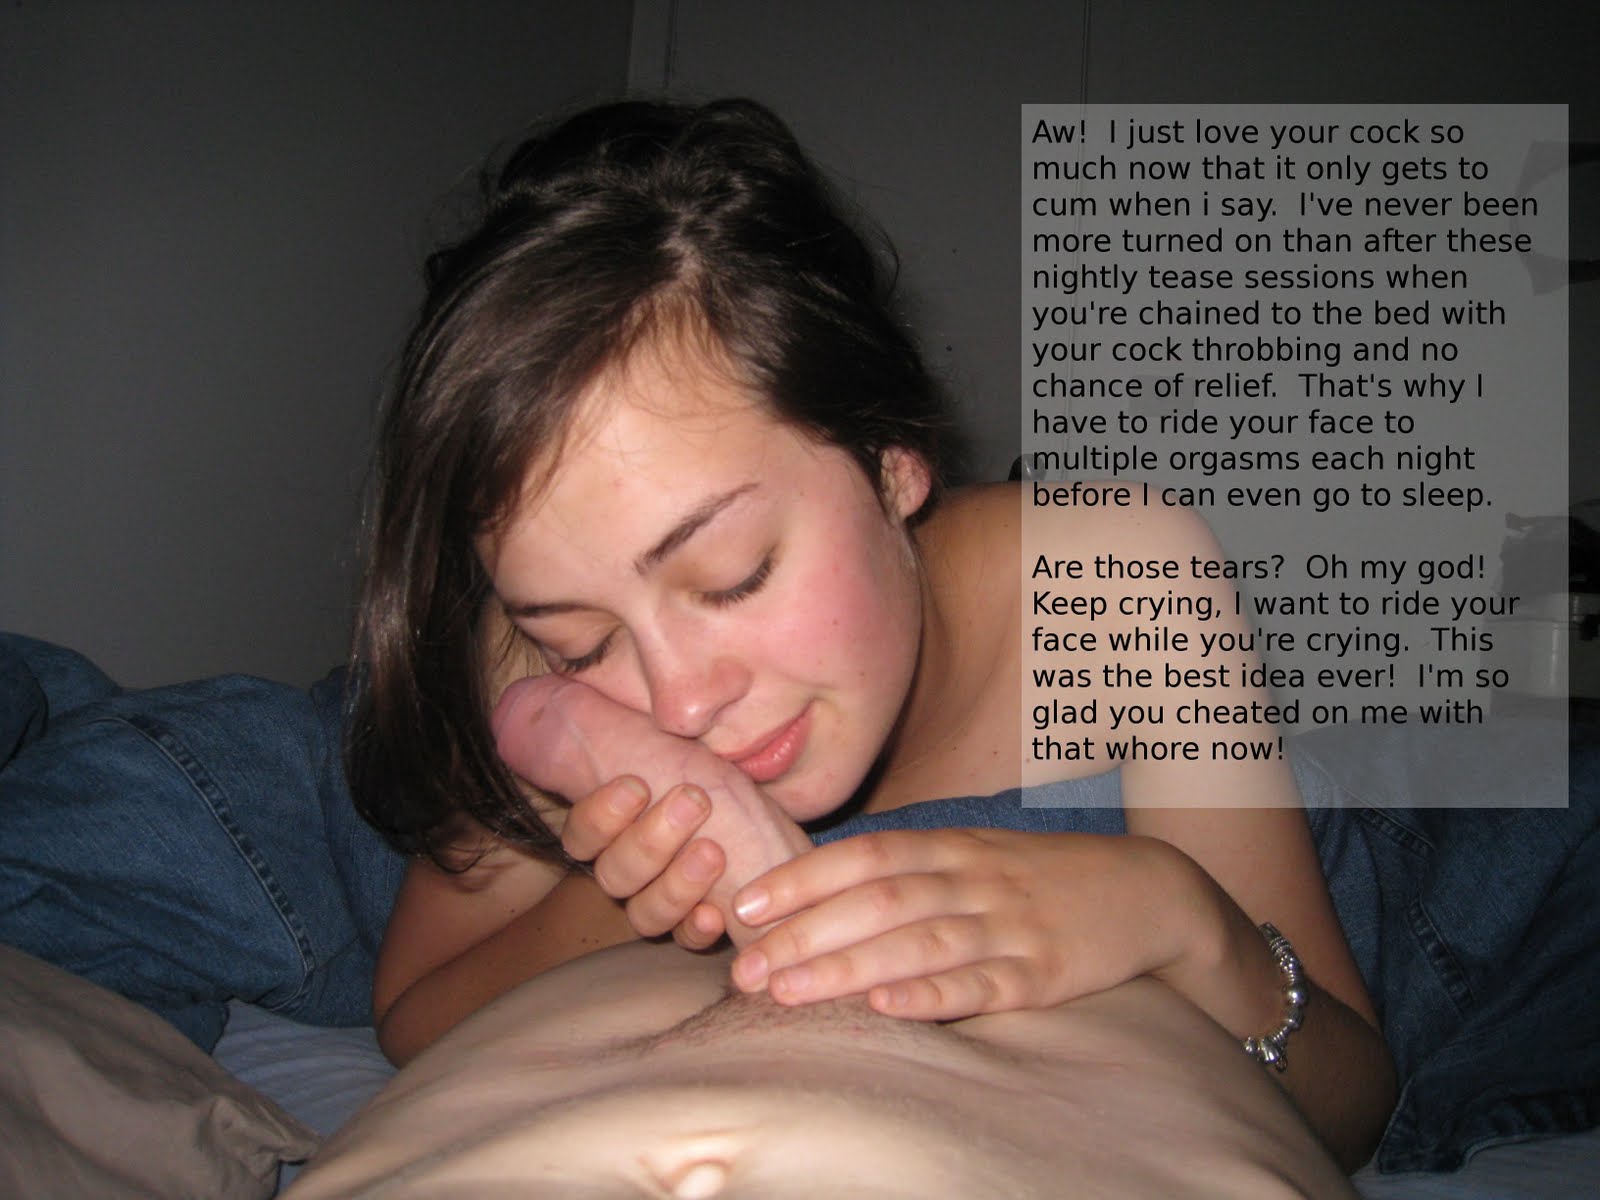 Man licking womens clit porn